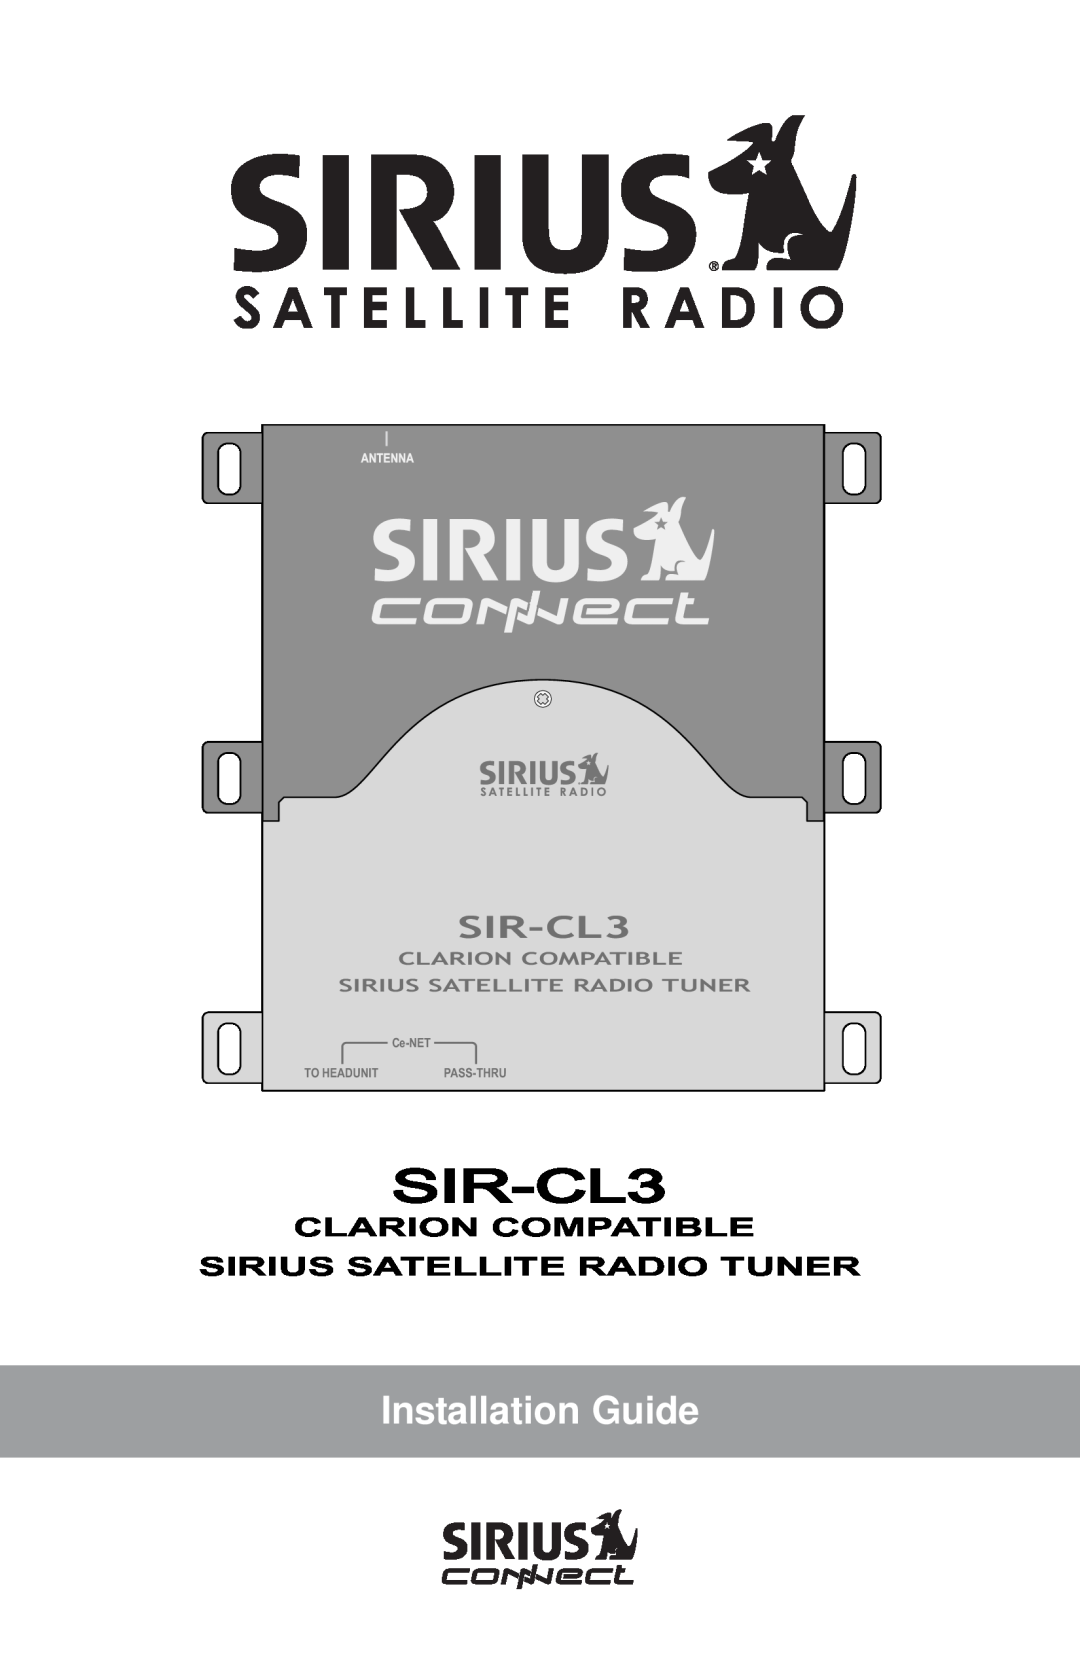 Sirius Satellite Radio SIR-CL3 manual Clarion Compatible Sirius Satellite Radio Tuner, Installation Guide, Ce-NET 